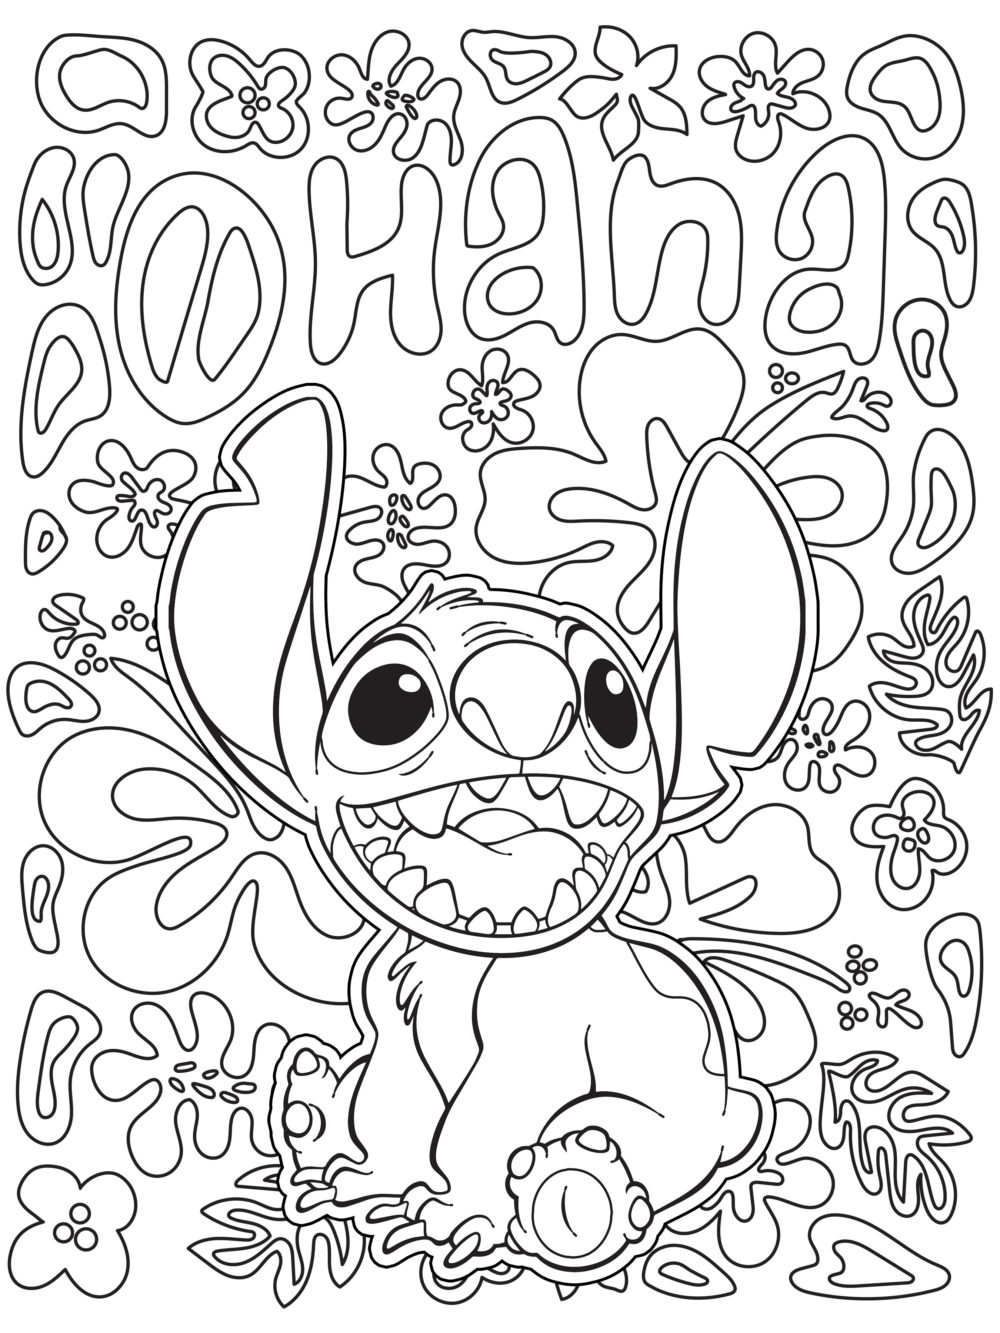 Lilo and Stitch Coloring Page   Lilo & Stitch фото 20   Fanpop